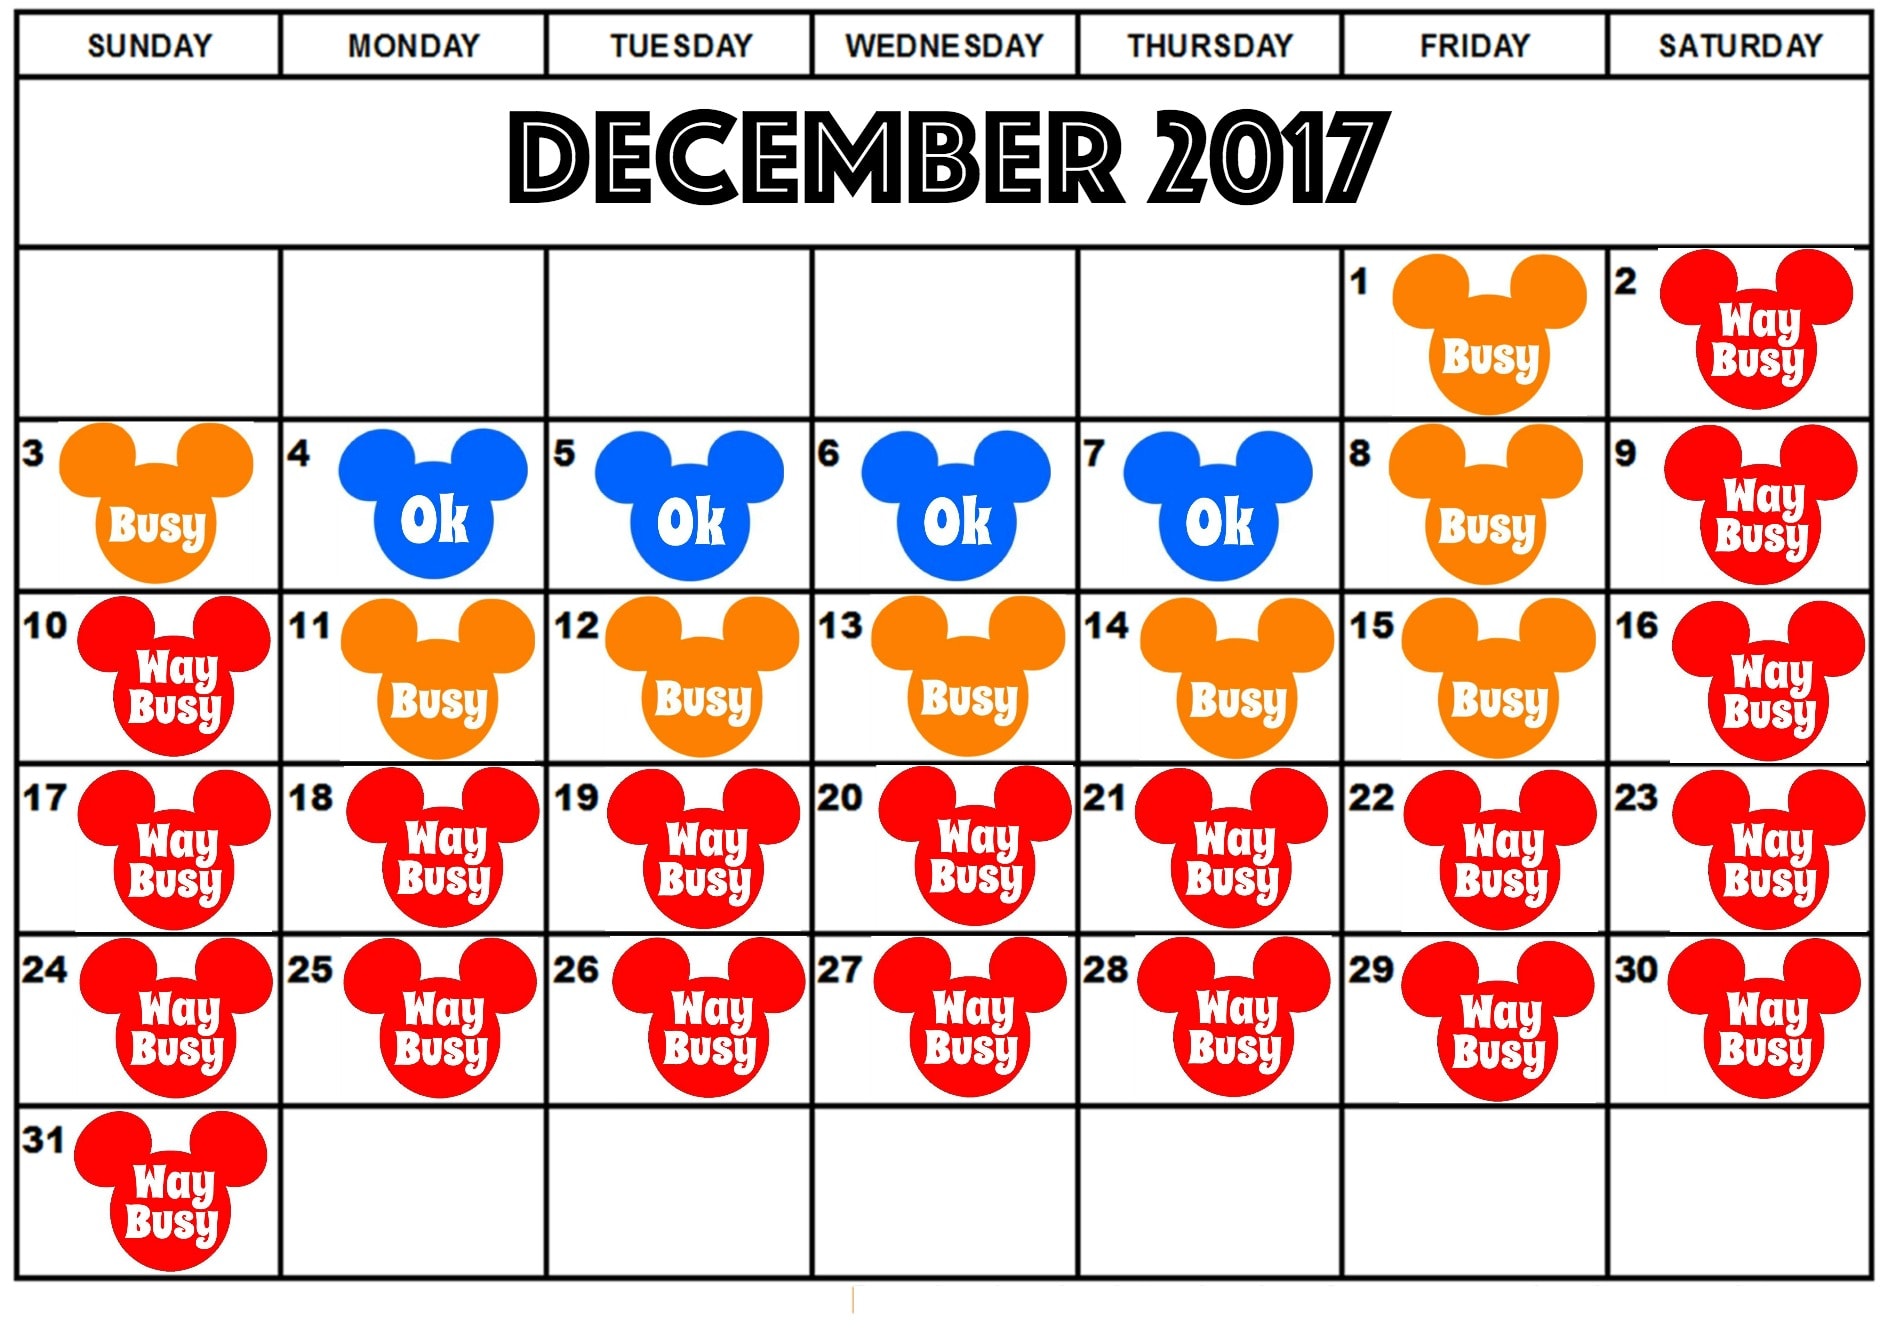 Disneyland December Crowd Calendar